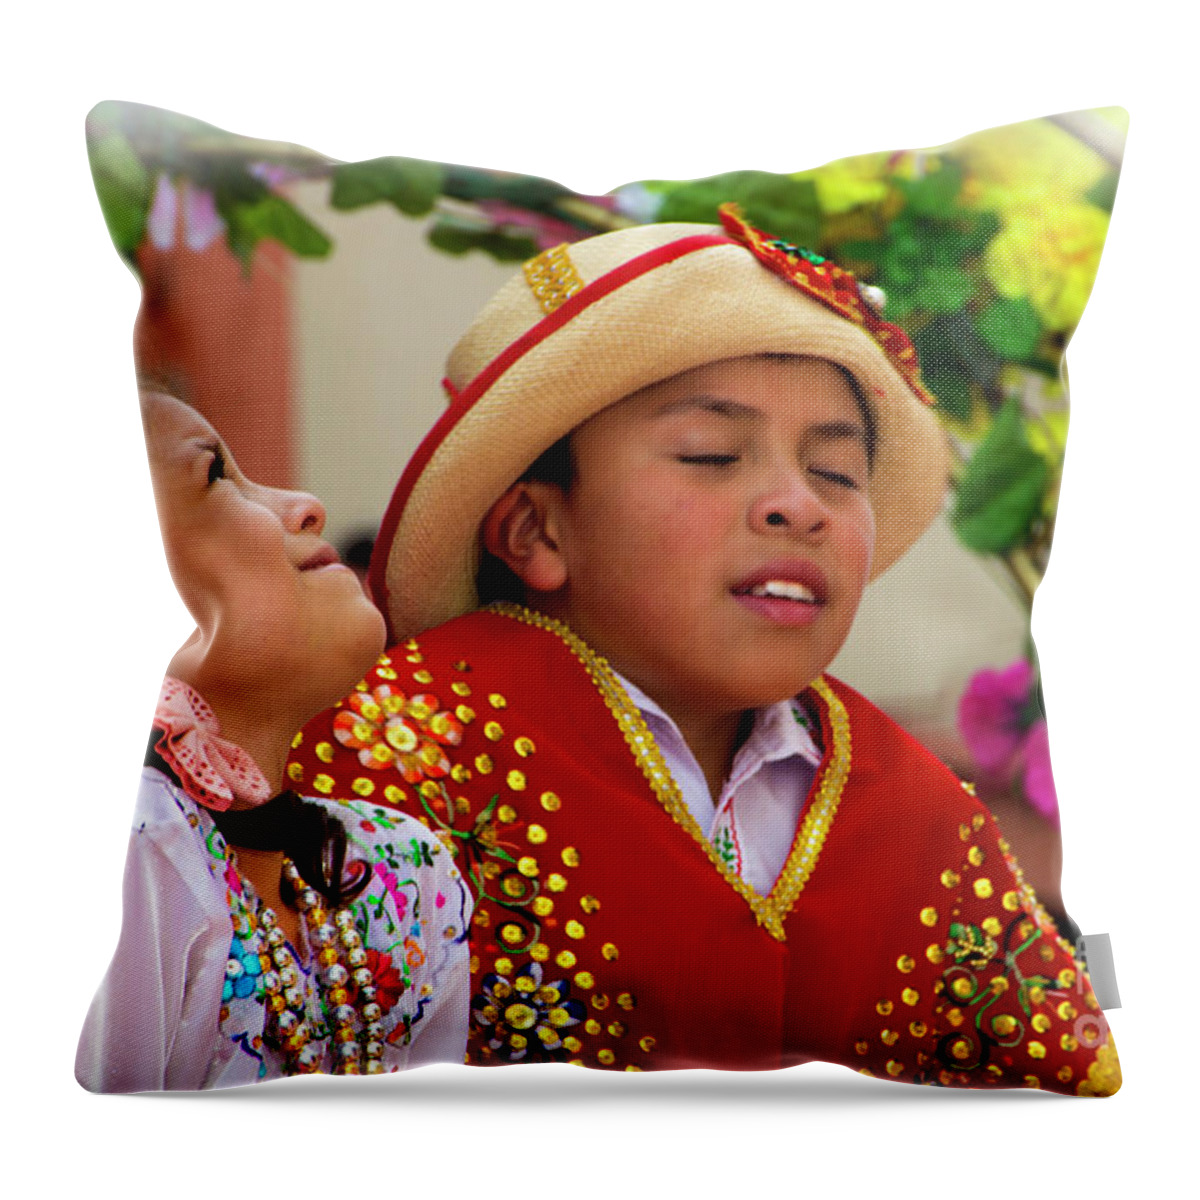 Boy Throw Pillow featuring the photograph Cuenca Kids 835 by Al Bourassa